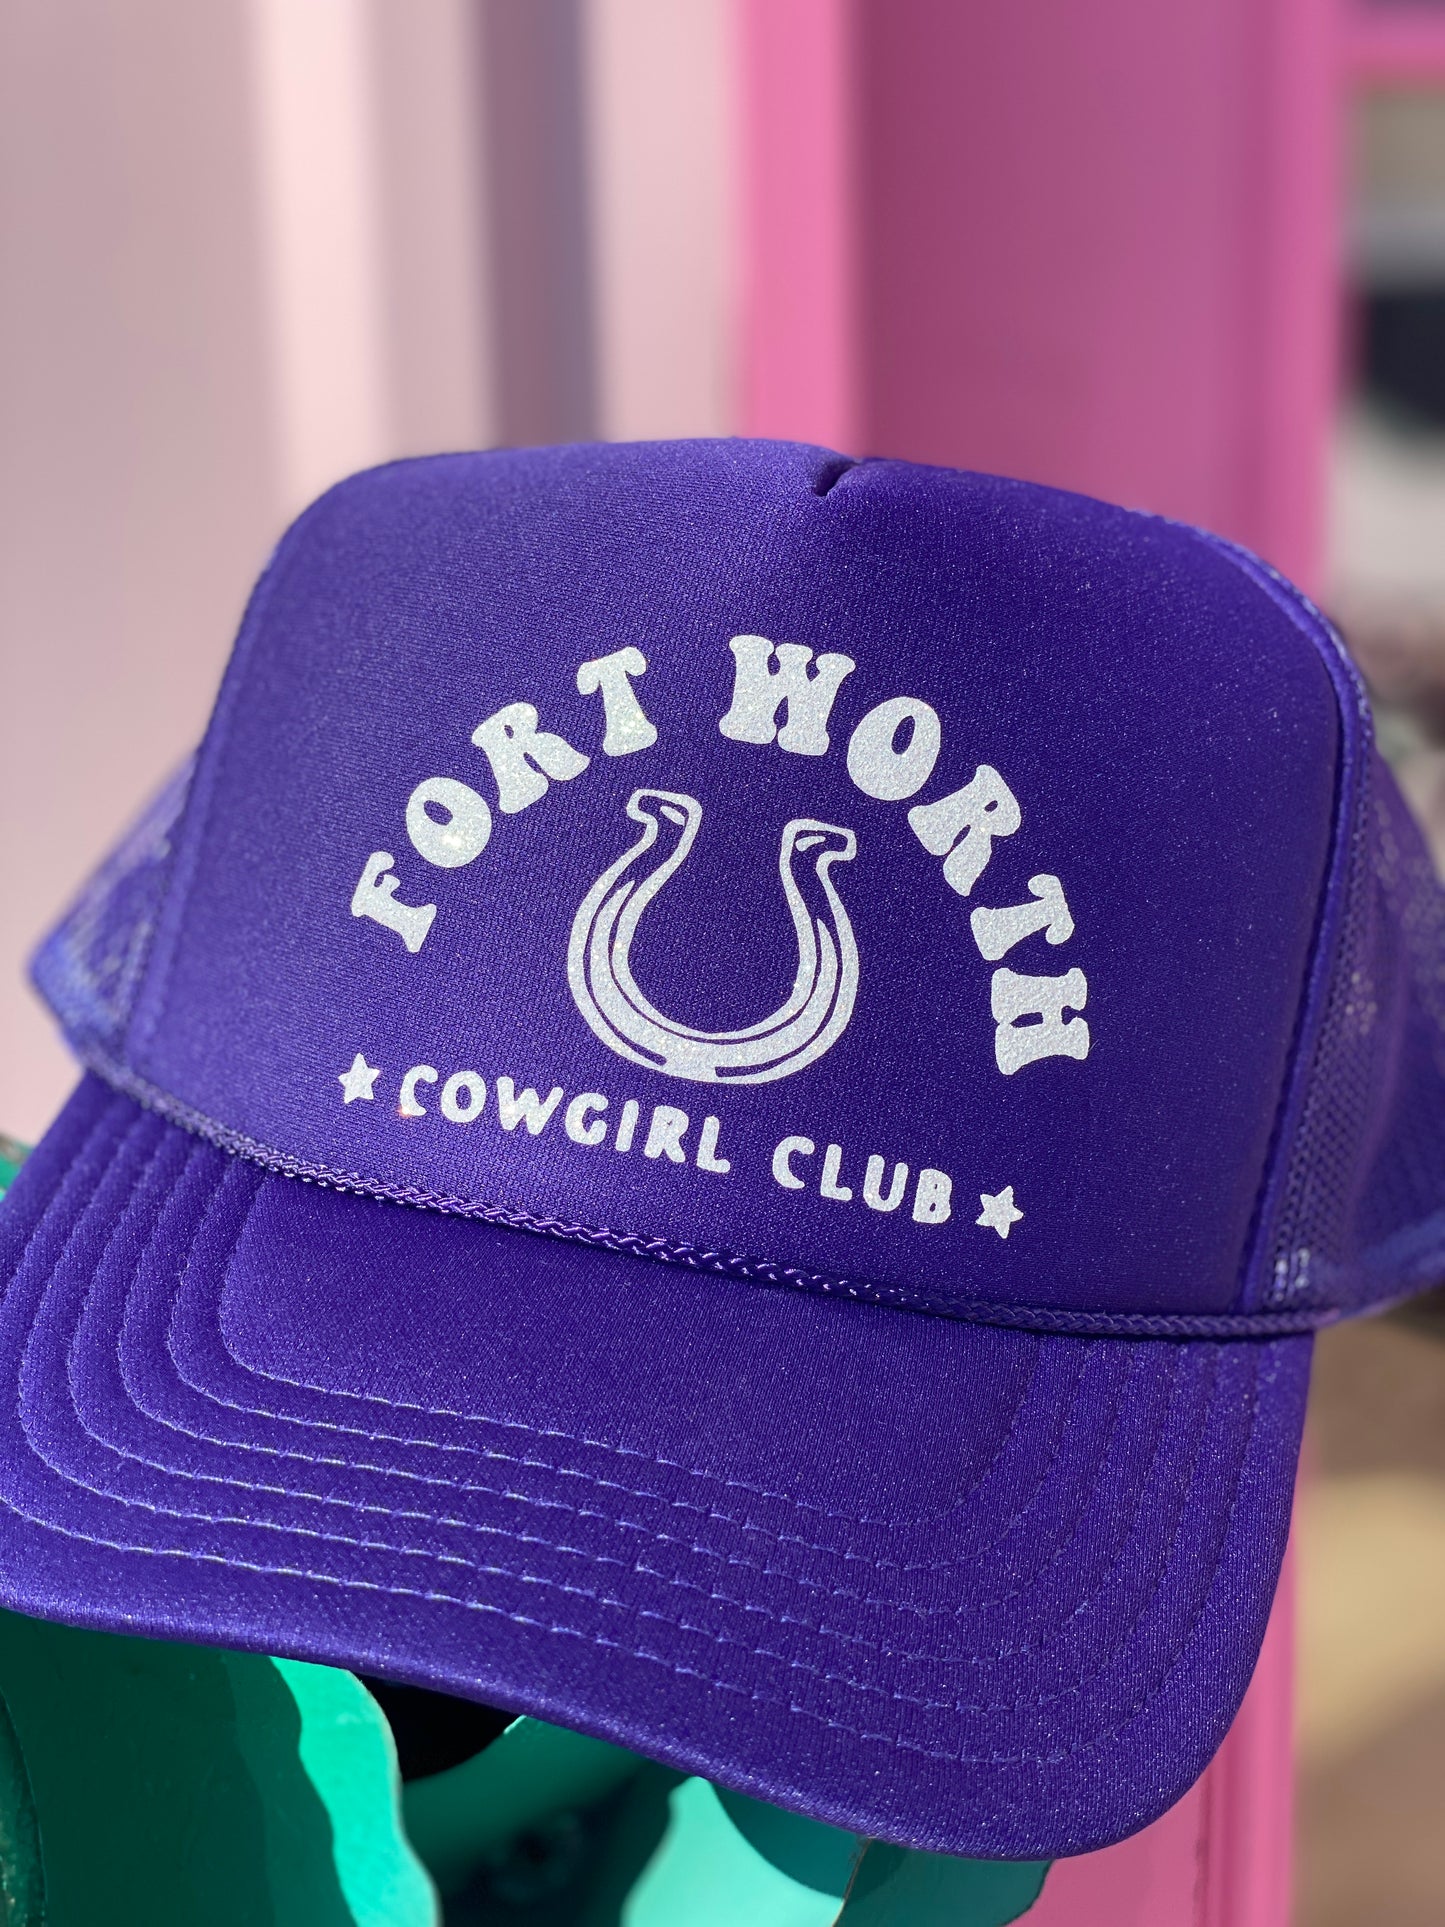 Fort Worth Cowgirl Club Trucker Hat by Ali Dee - Solid Purple